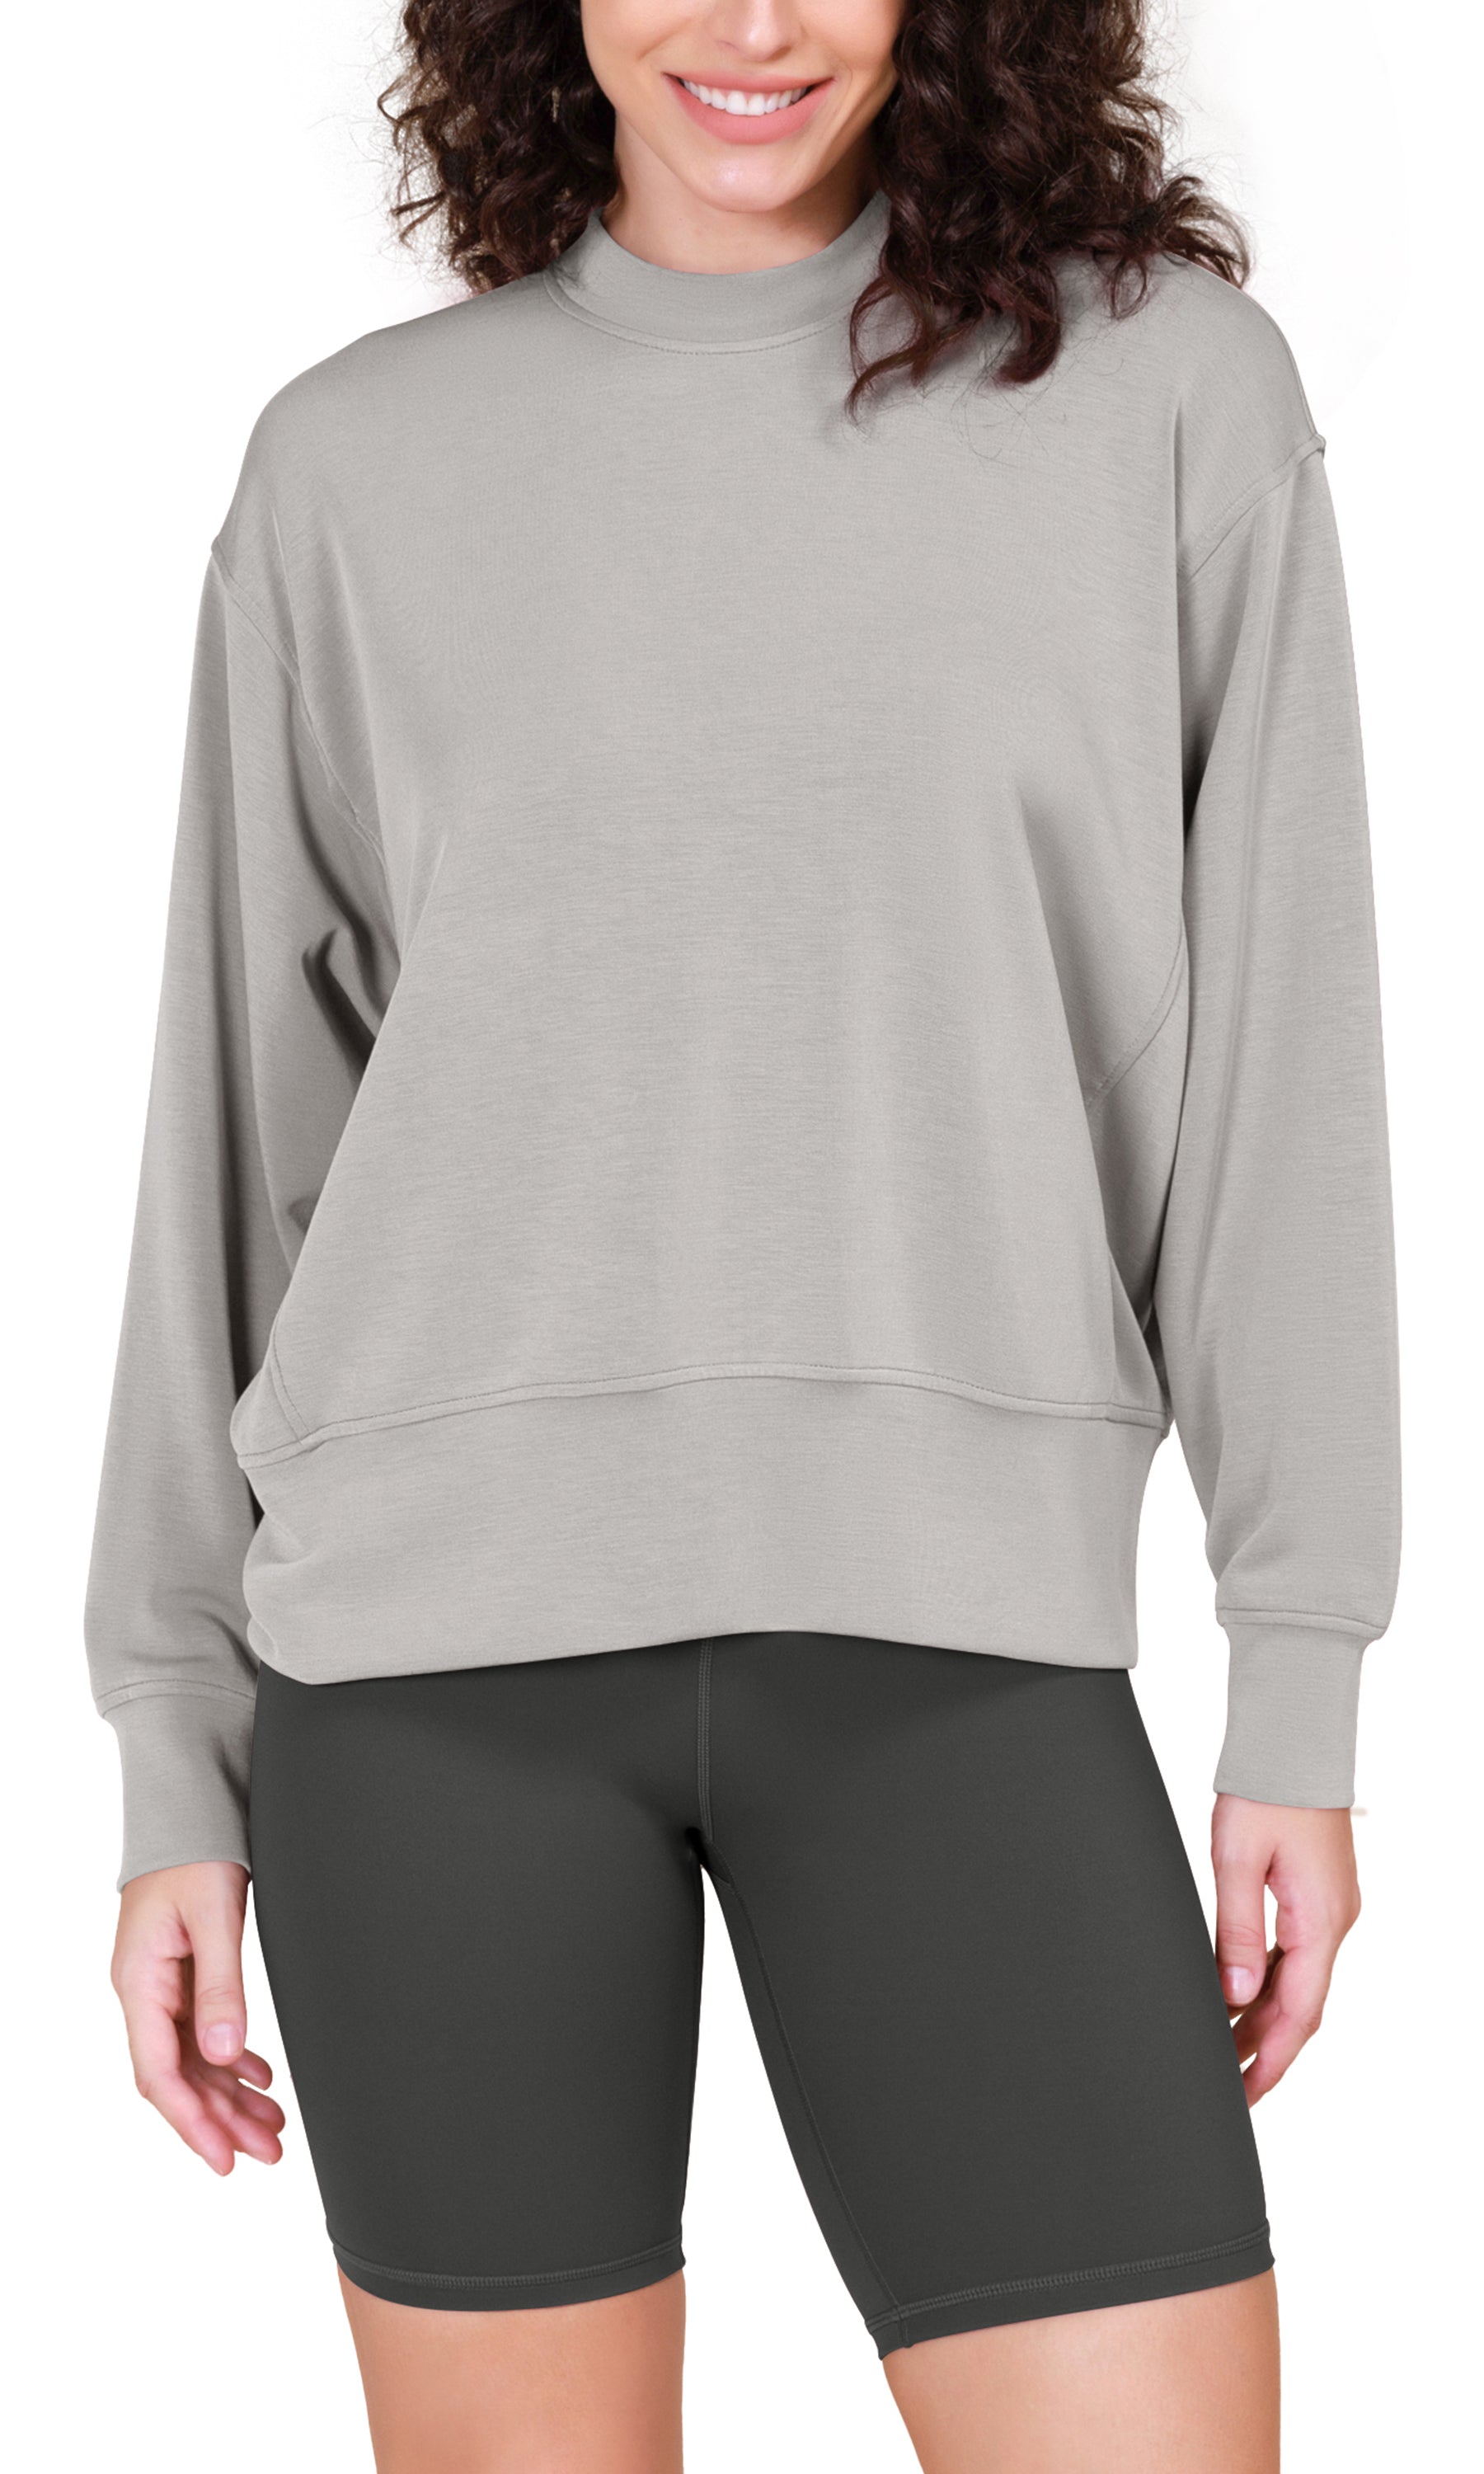 Modal Soft Long Sleeve Oversized Sweatshirts Light Gray - ododos